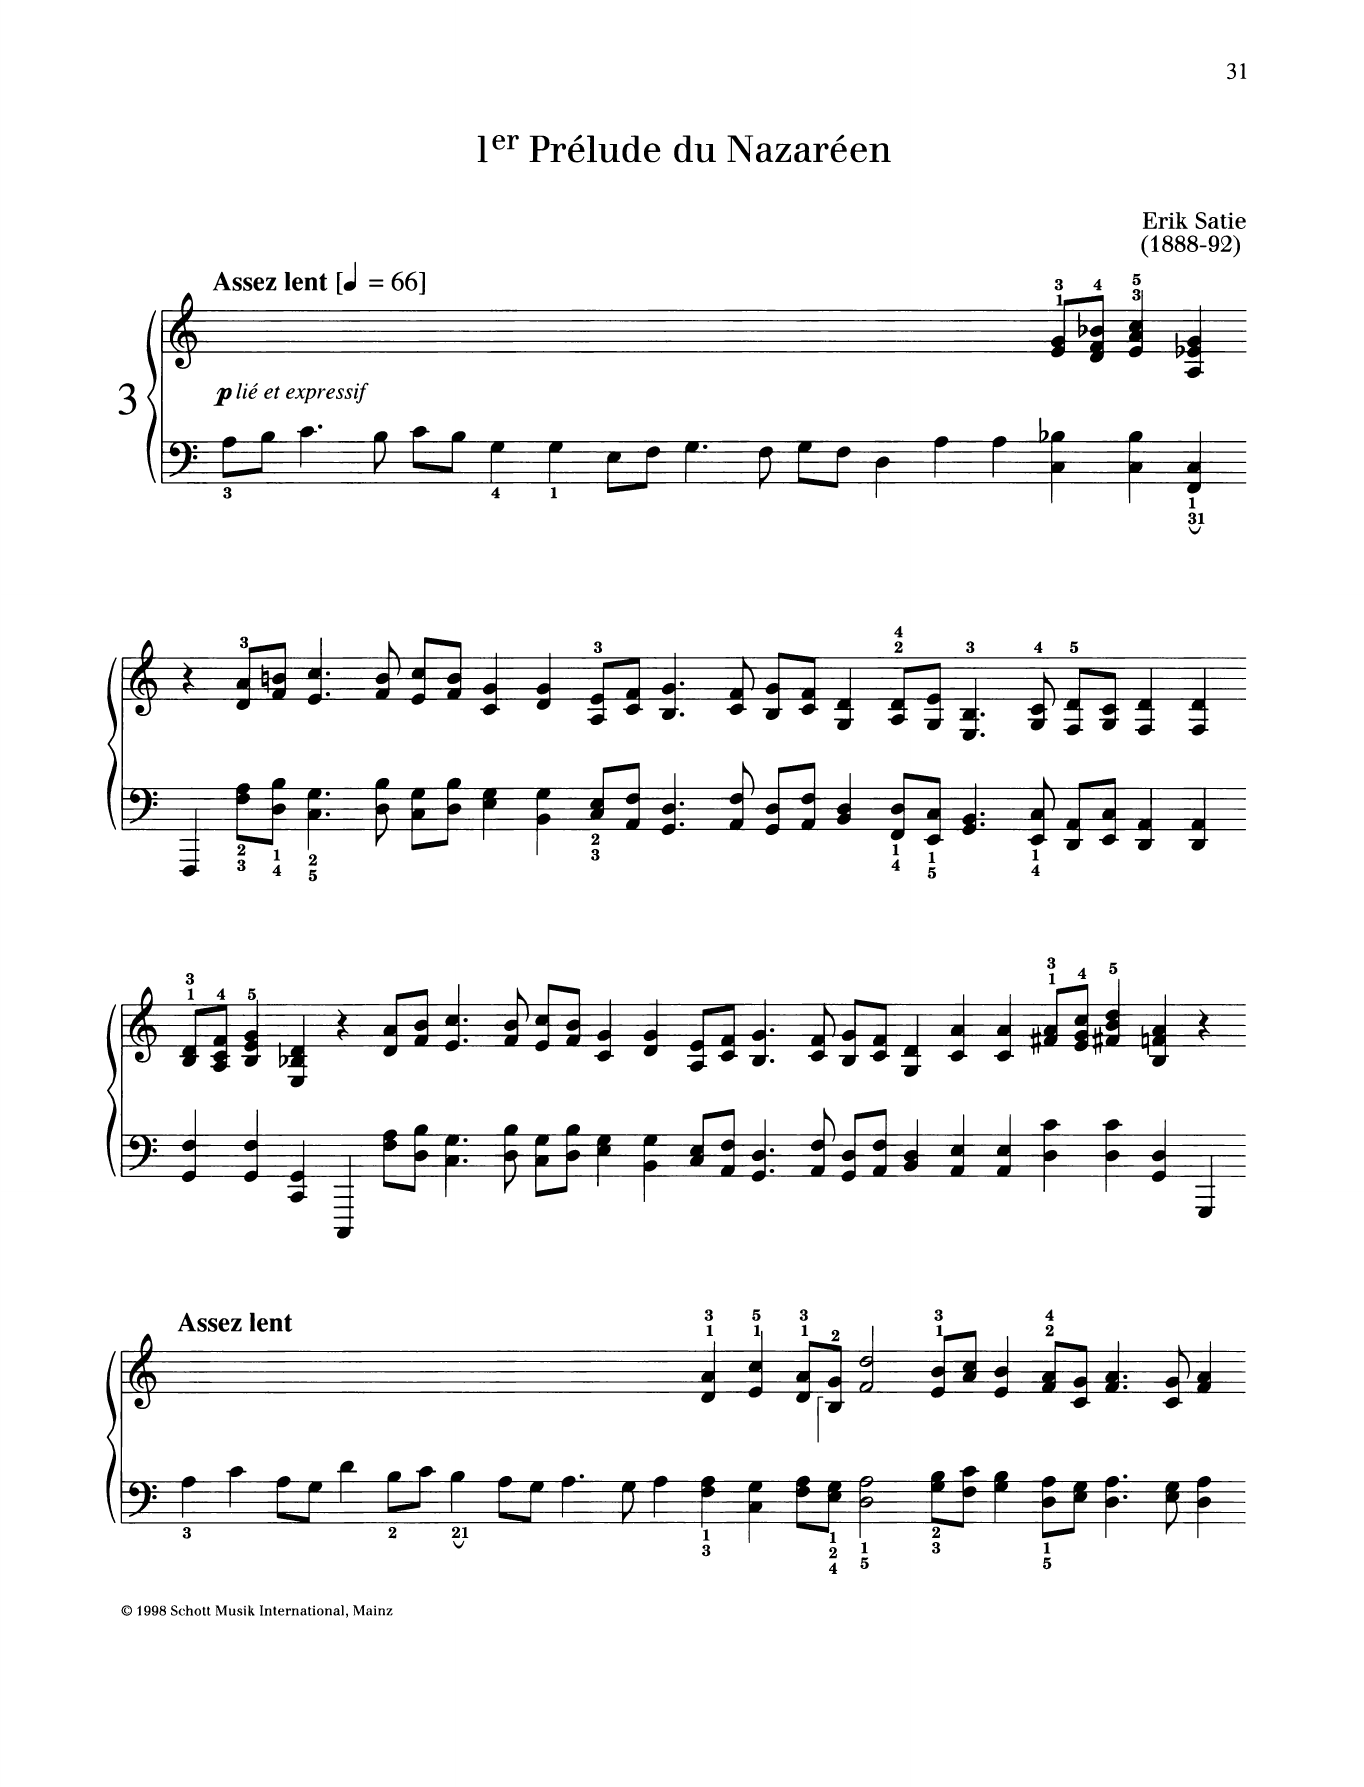 Download Erik Satie 1er Prelude du Nazareen Sheet Music